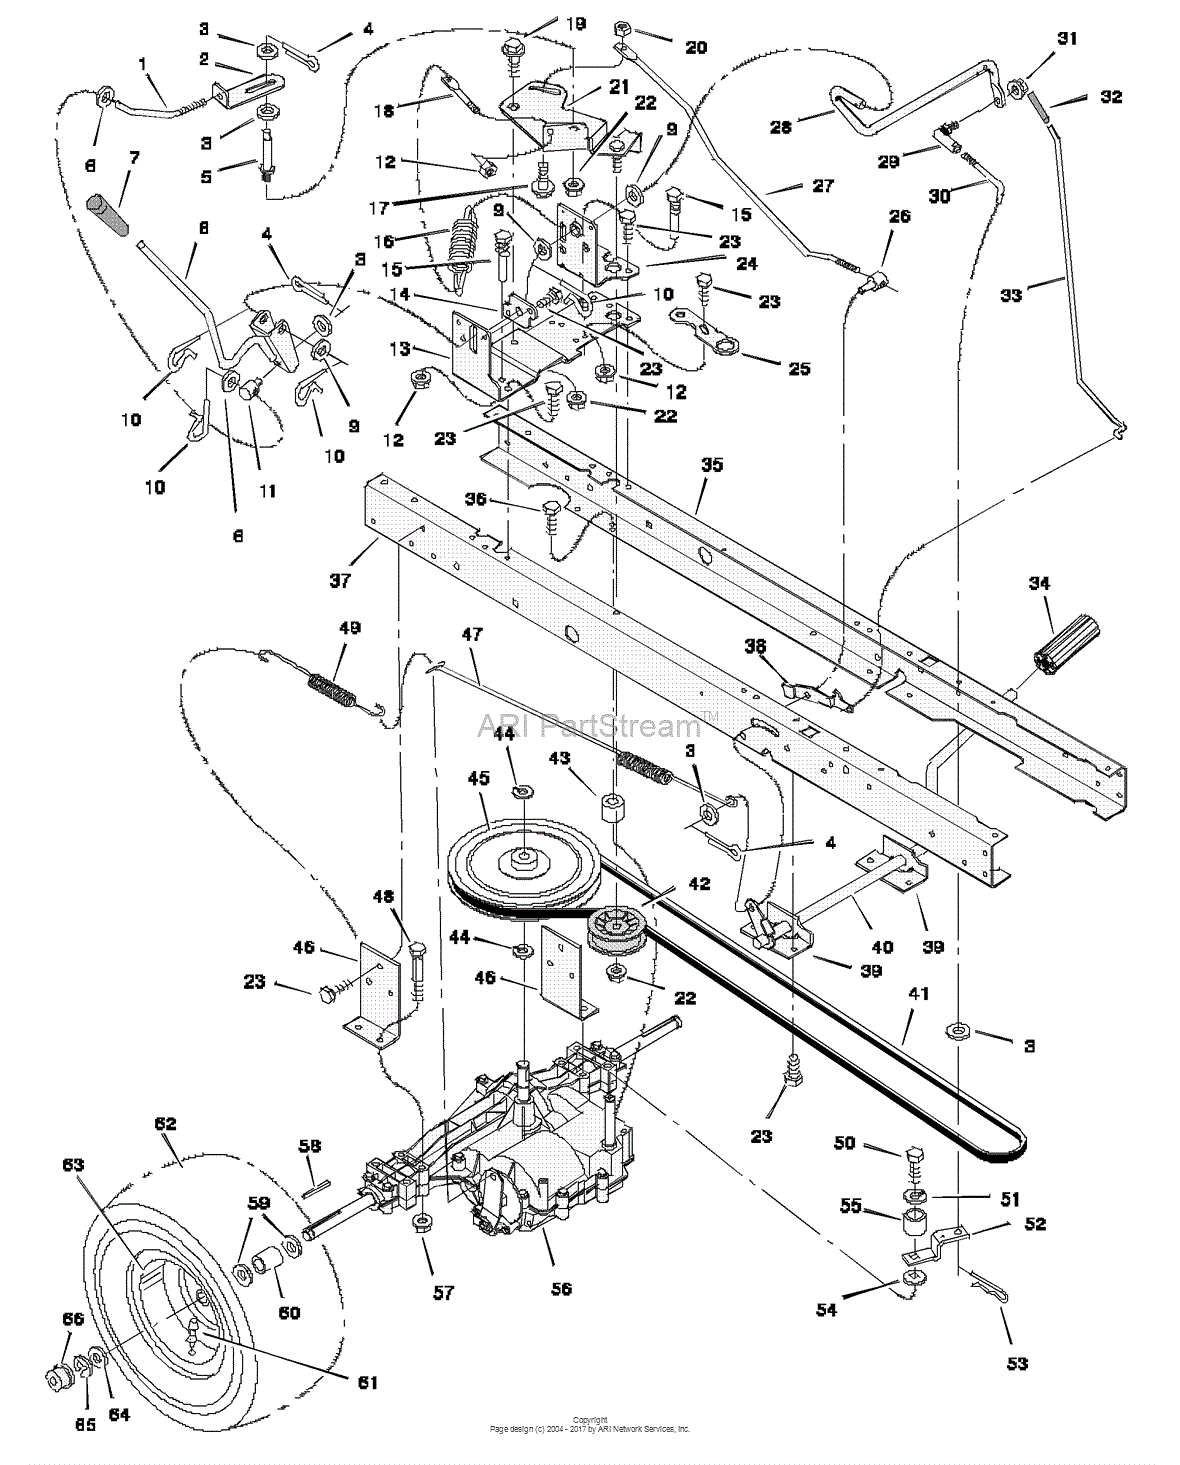 Aaon Wiring Schematic - jentaplerdesigns